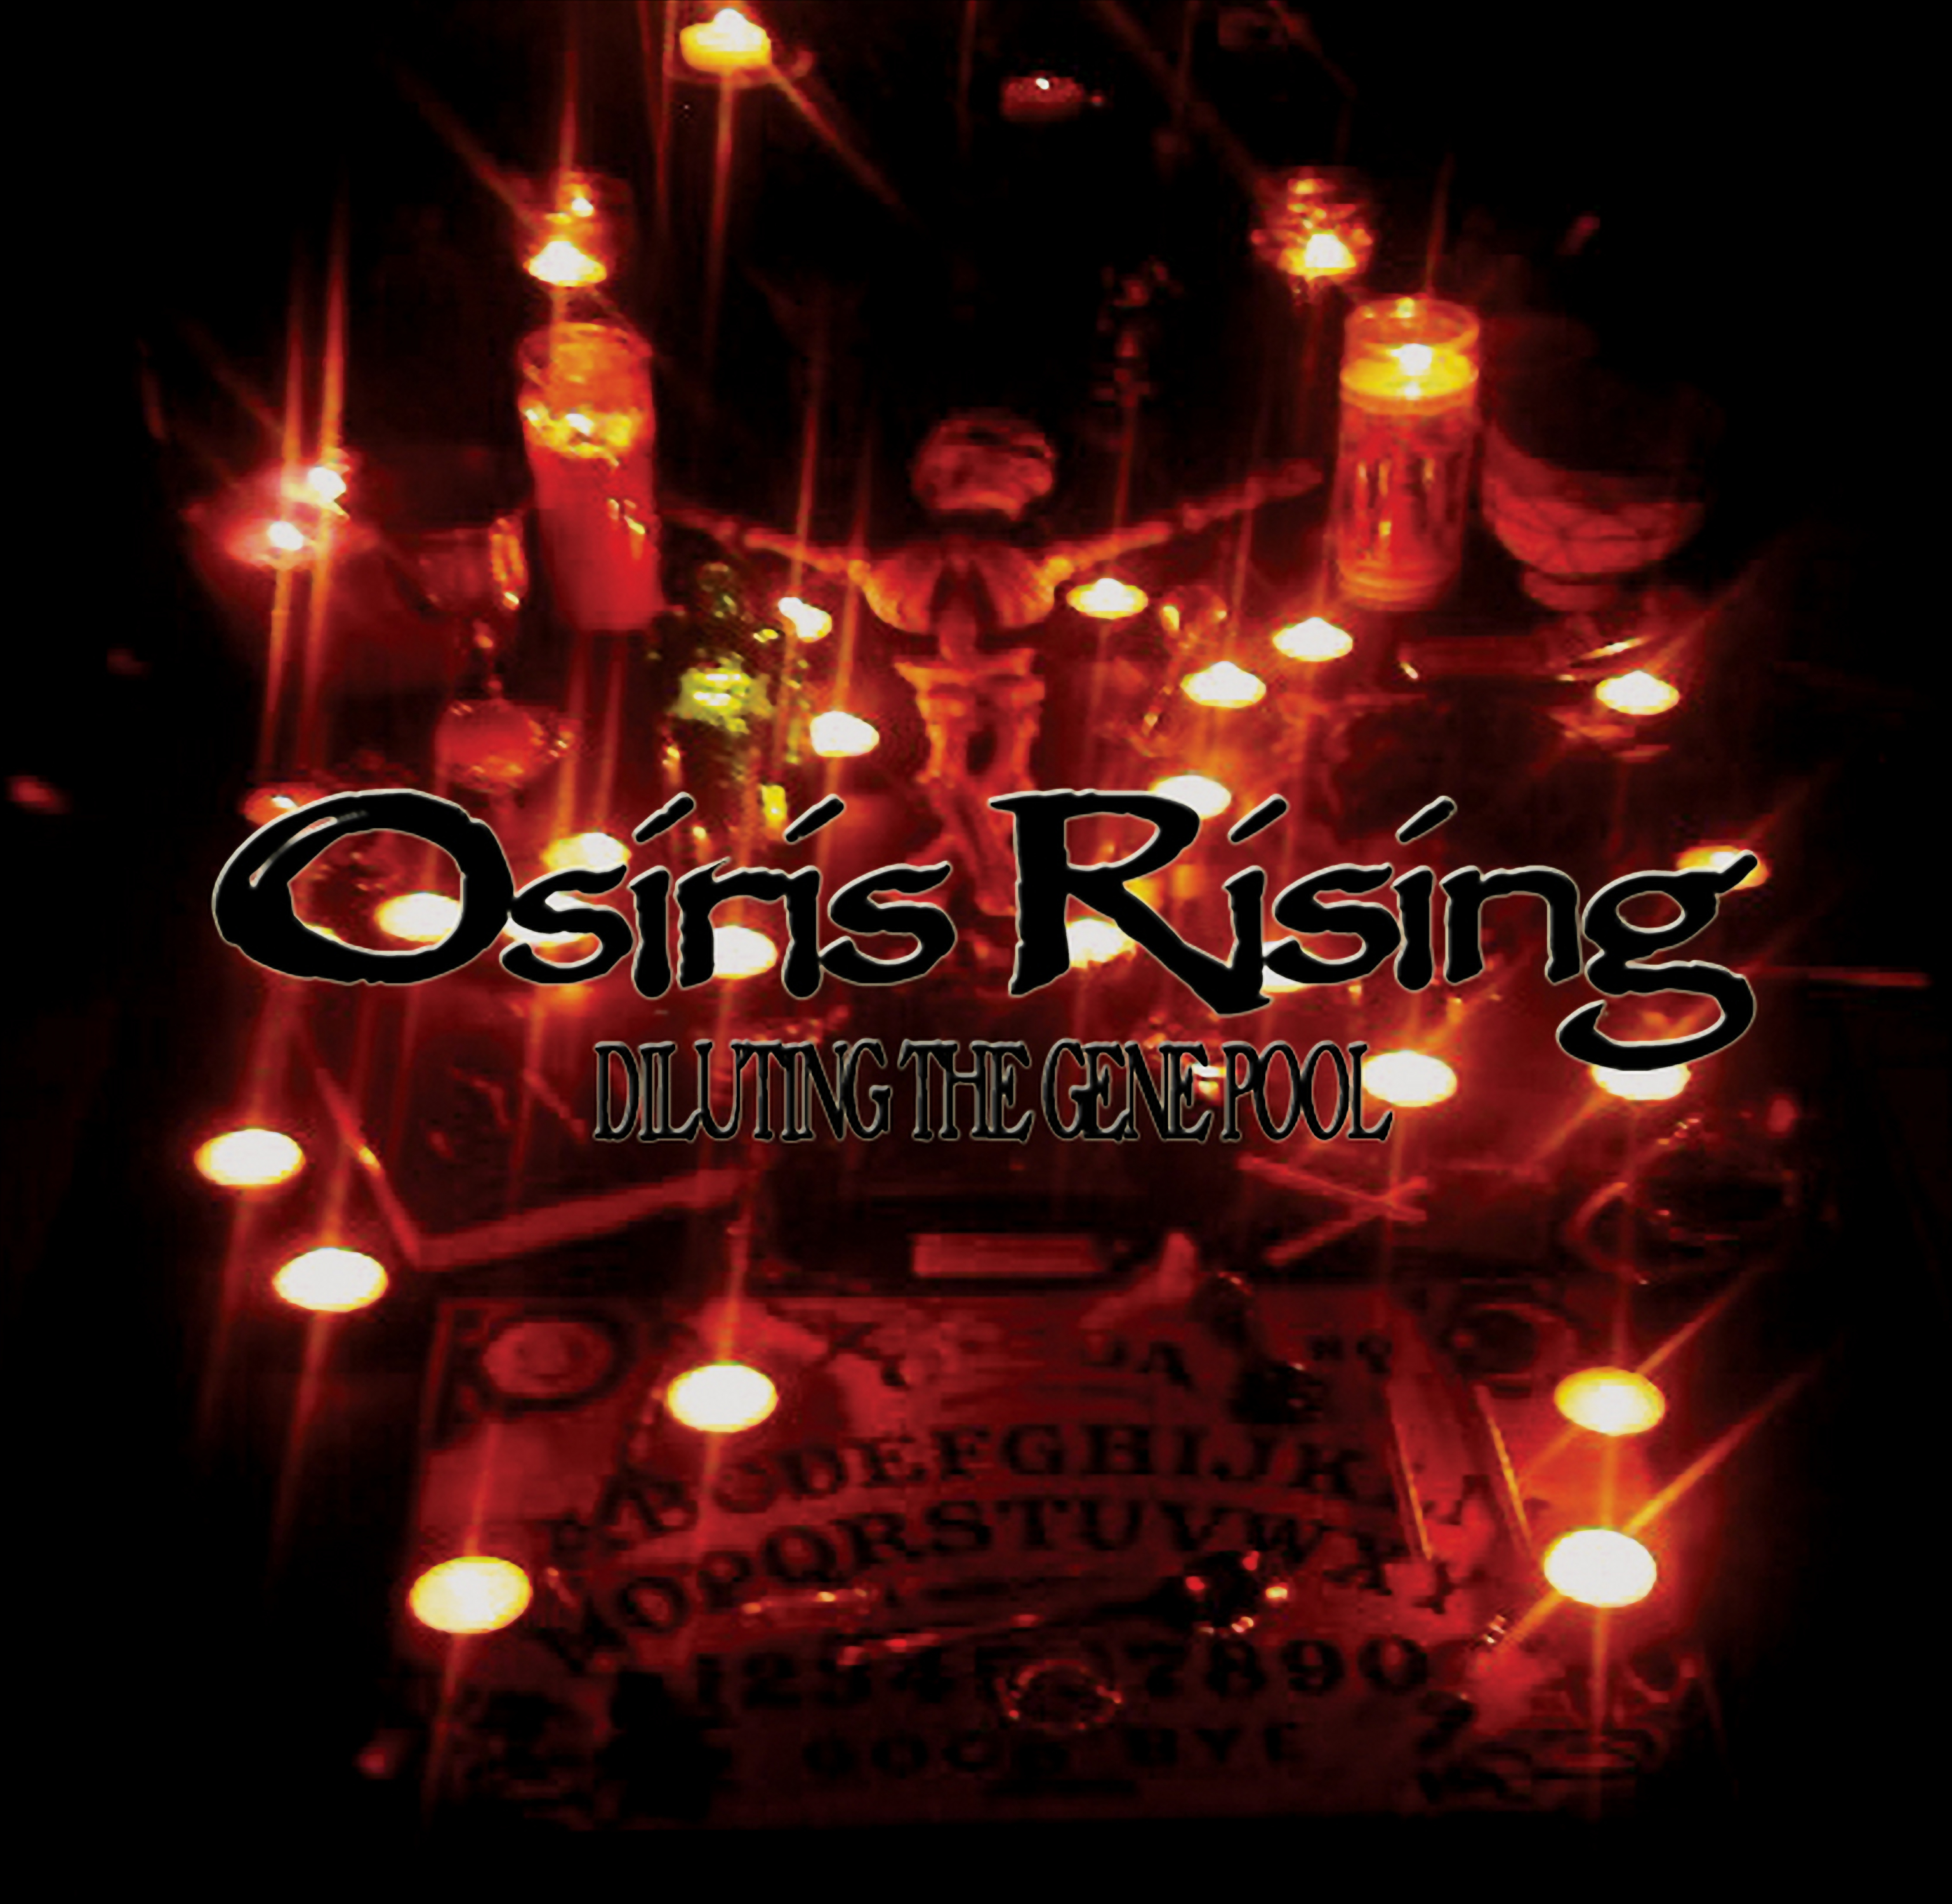 Osiris Rising - Diluting The Gene Pool - Album cover - Created May 2005 - Cover artwork by Brian (VoR) Vorisek